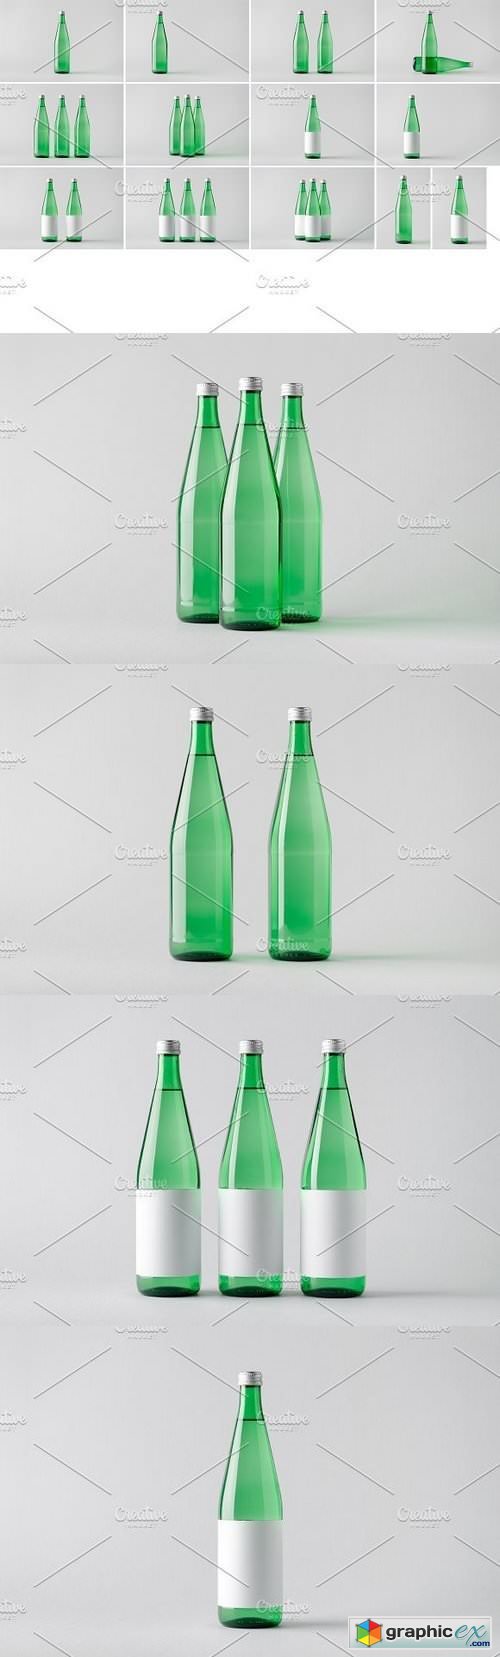 Water Bottle Mock-Up Photo Bundle 2